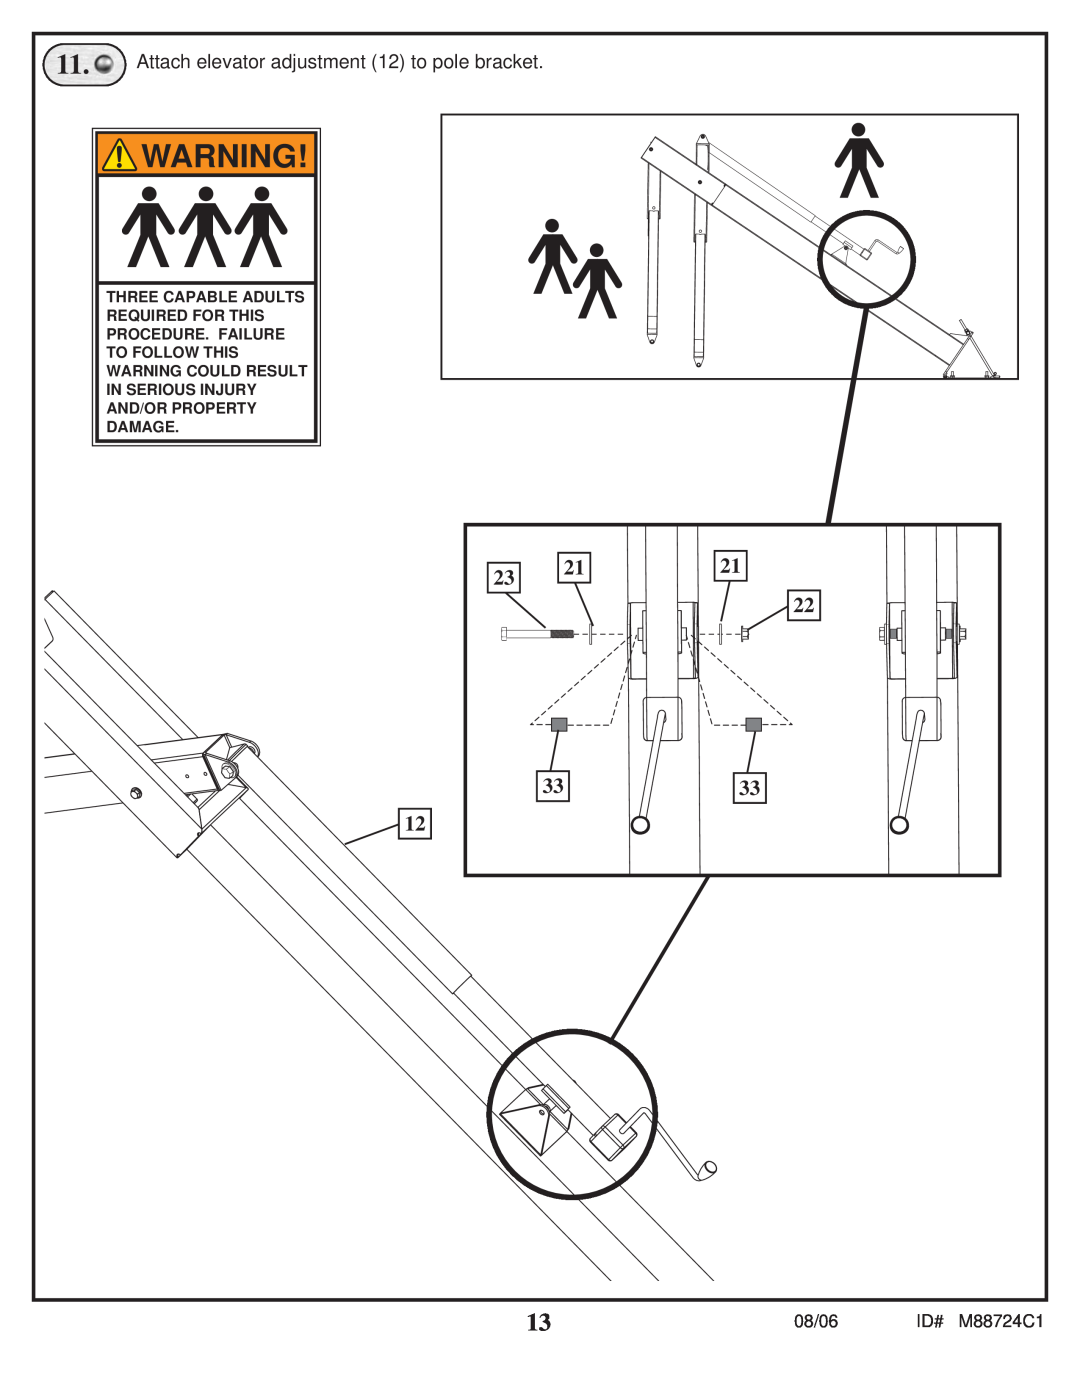 Spalding manual Attach elevator adjustment 12 to pole bracket, 08/06, ID# M88724C1, Damage 